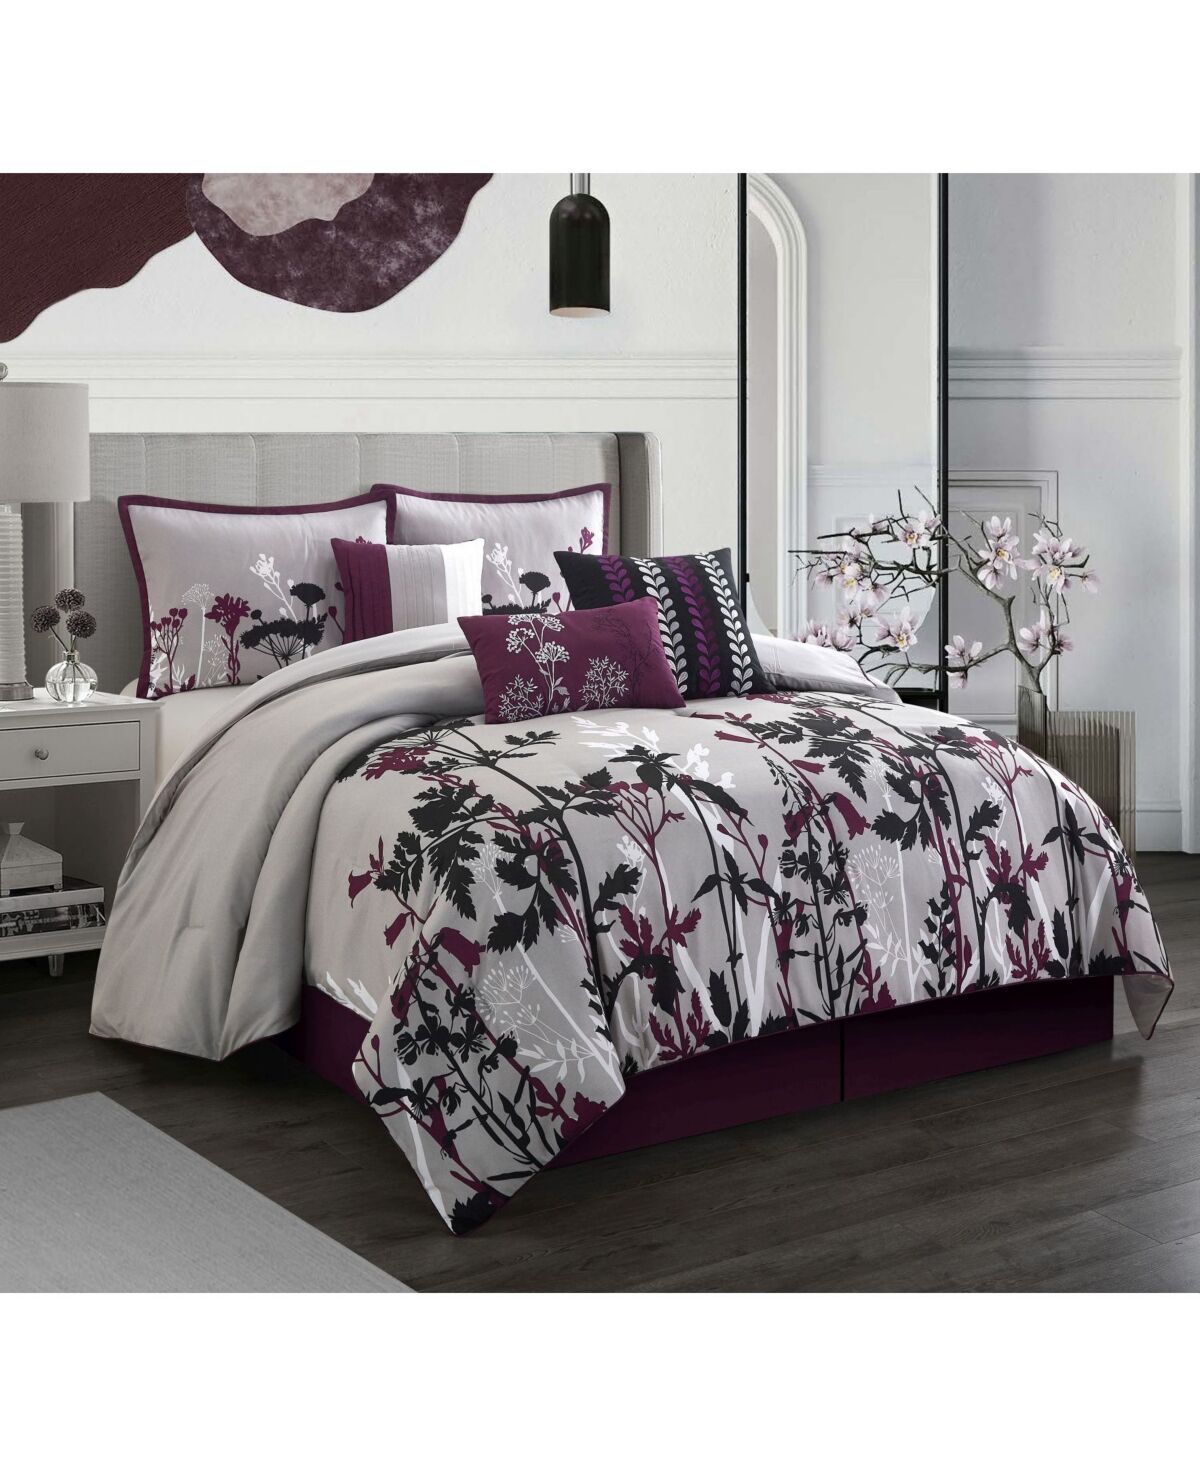 Nanshing Darlene Comforter Set, Queen, 7-Piece - Purple